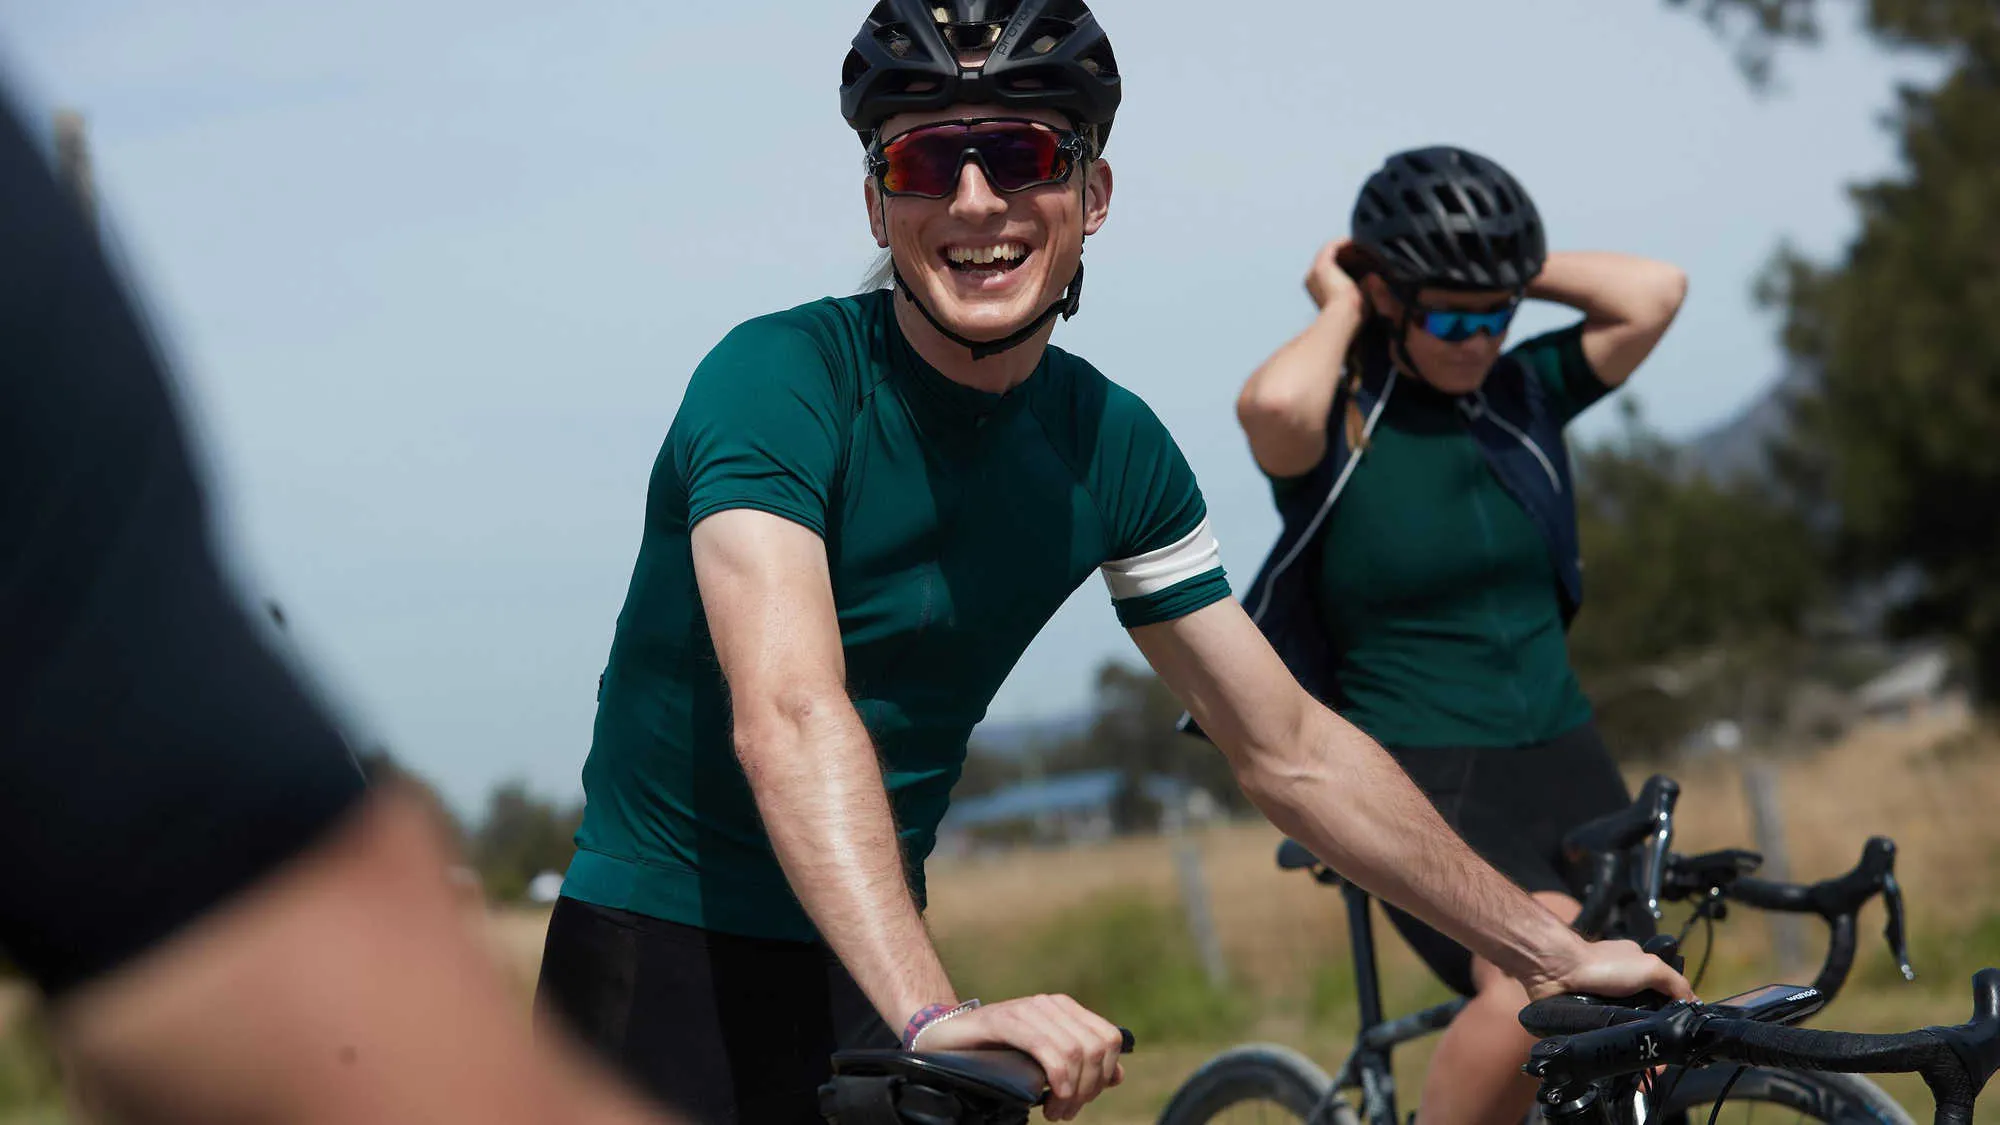 2022 Ropa nueva Tops PITA SPEXCELL RSANTCE Hombres Ciclismo de verano MTB Camisa Bicicleta de manga corta Jersey de bicicleta de uniforme